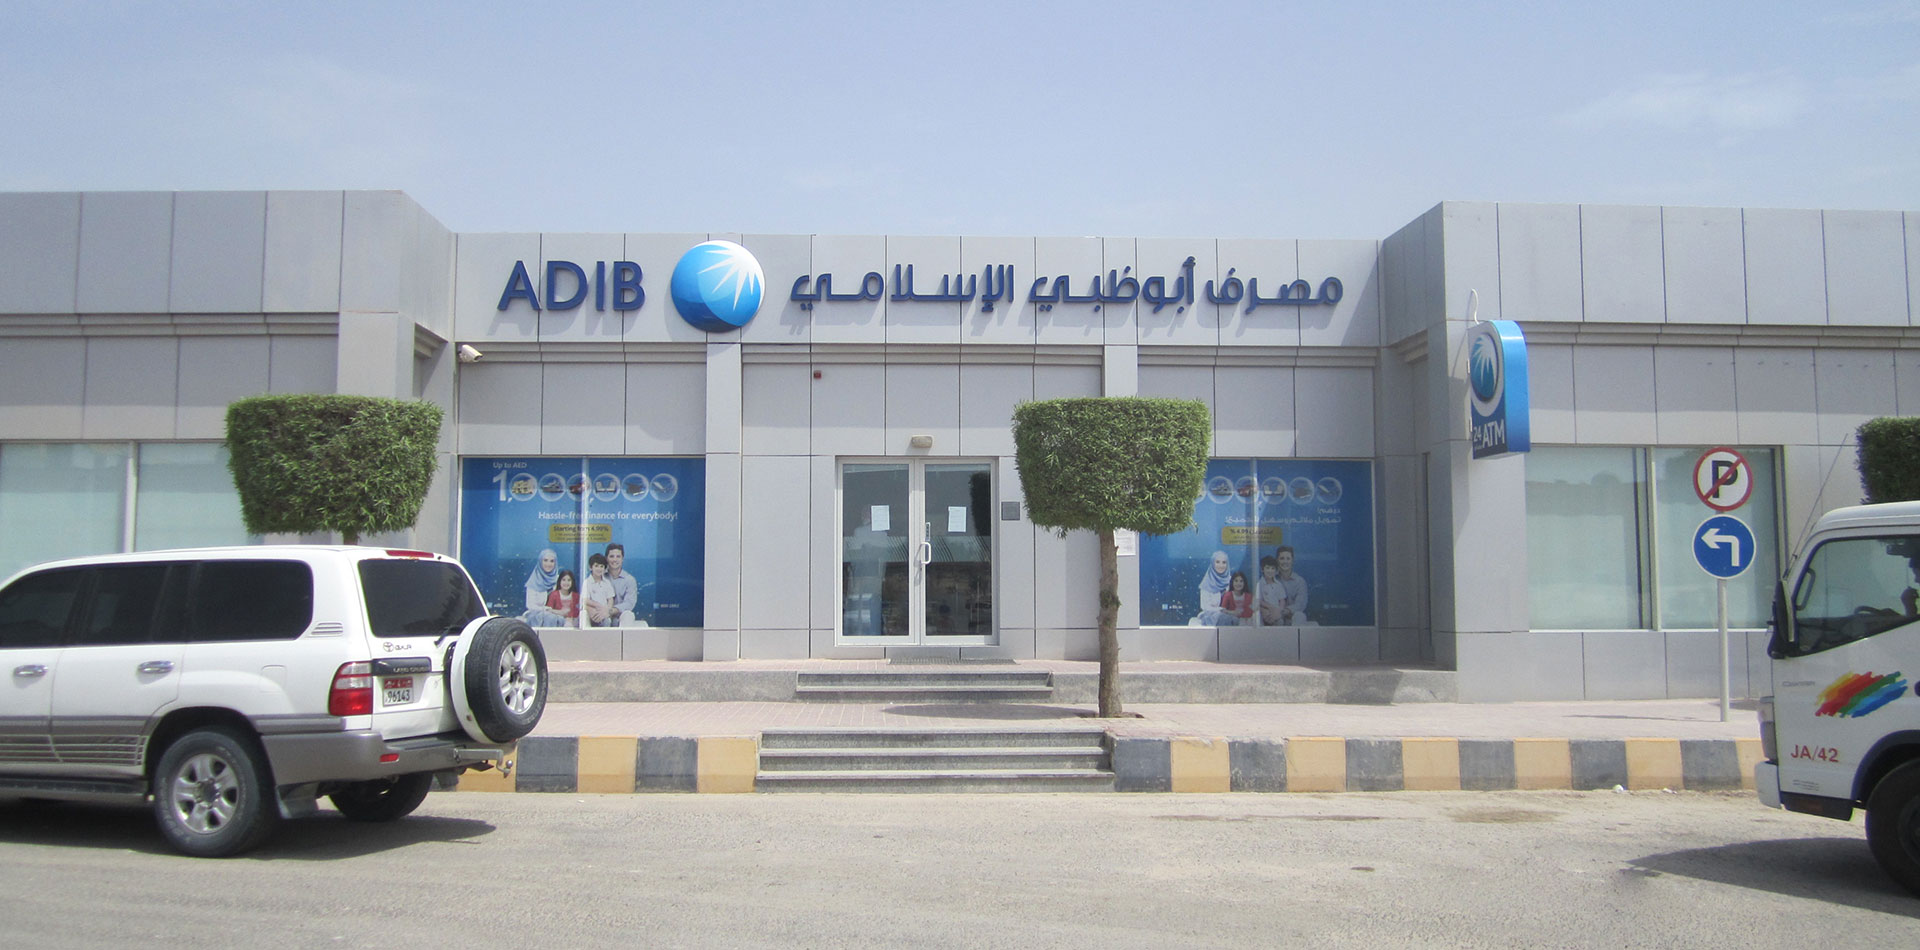 ADIB Entrance